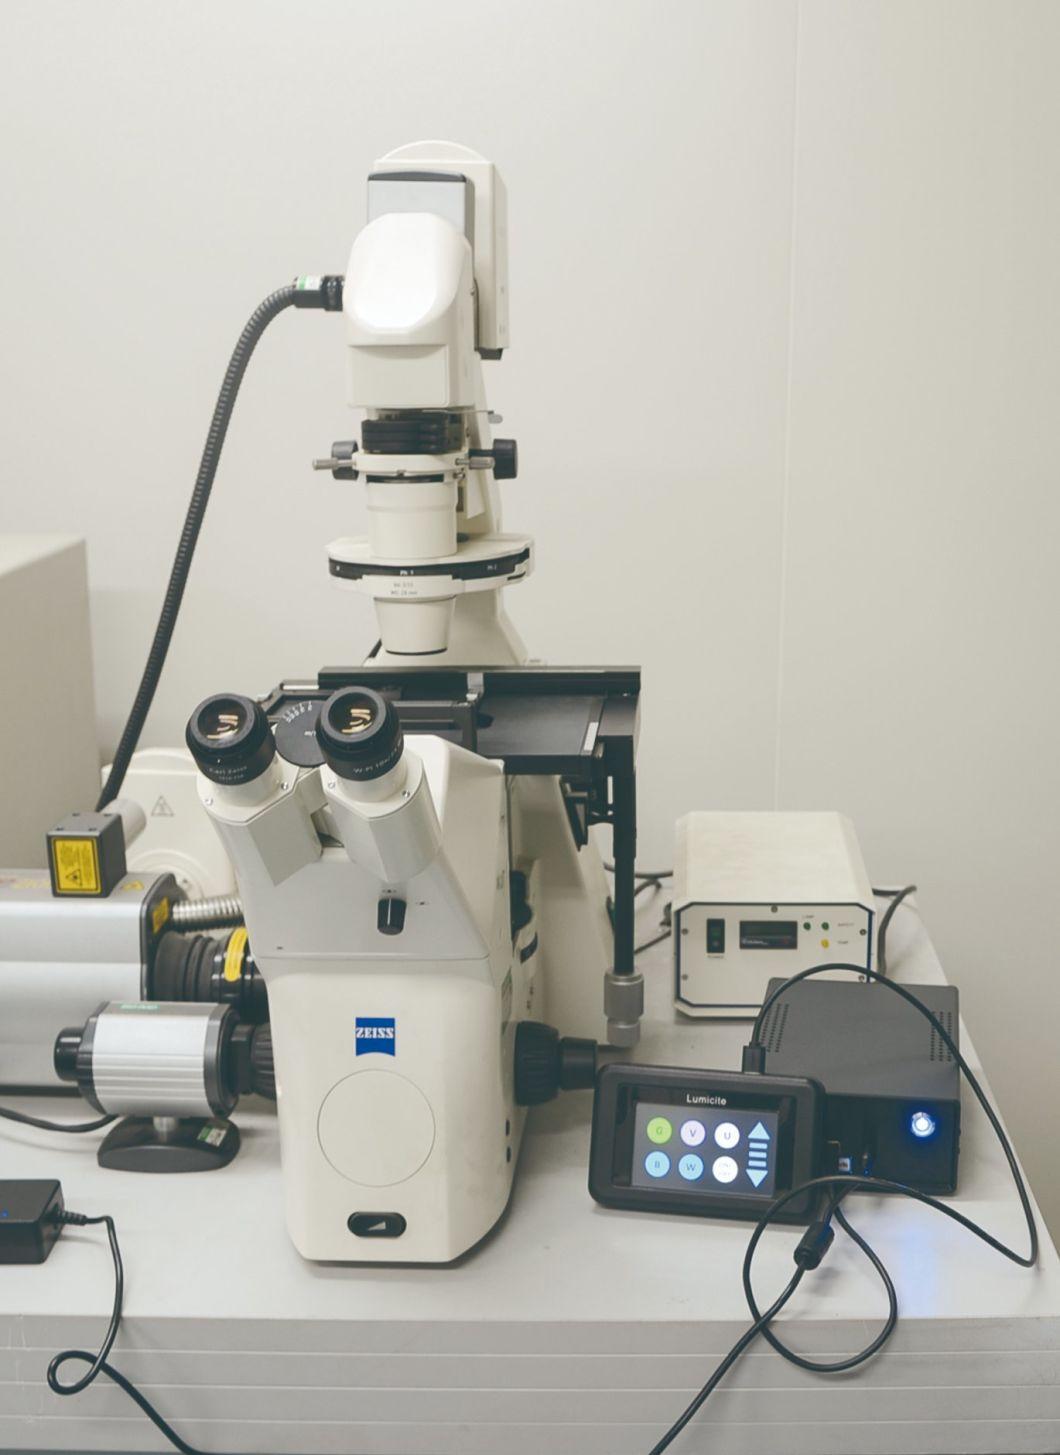 LED Illuminator for Microscope to Replace Mercury Lamp